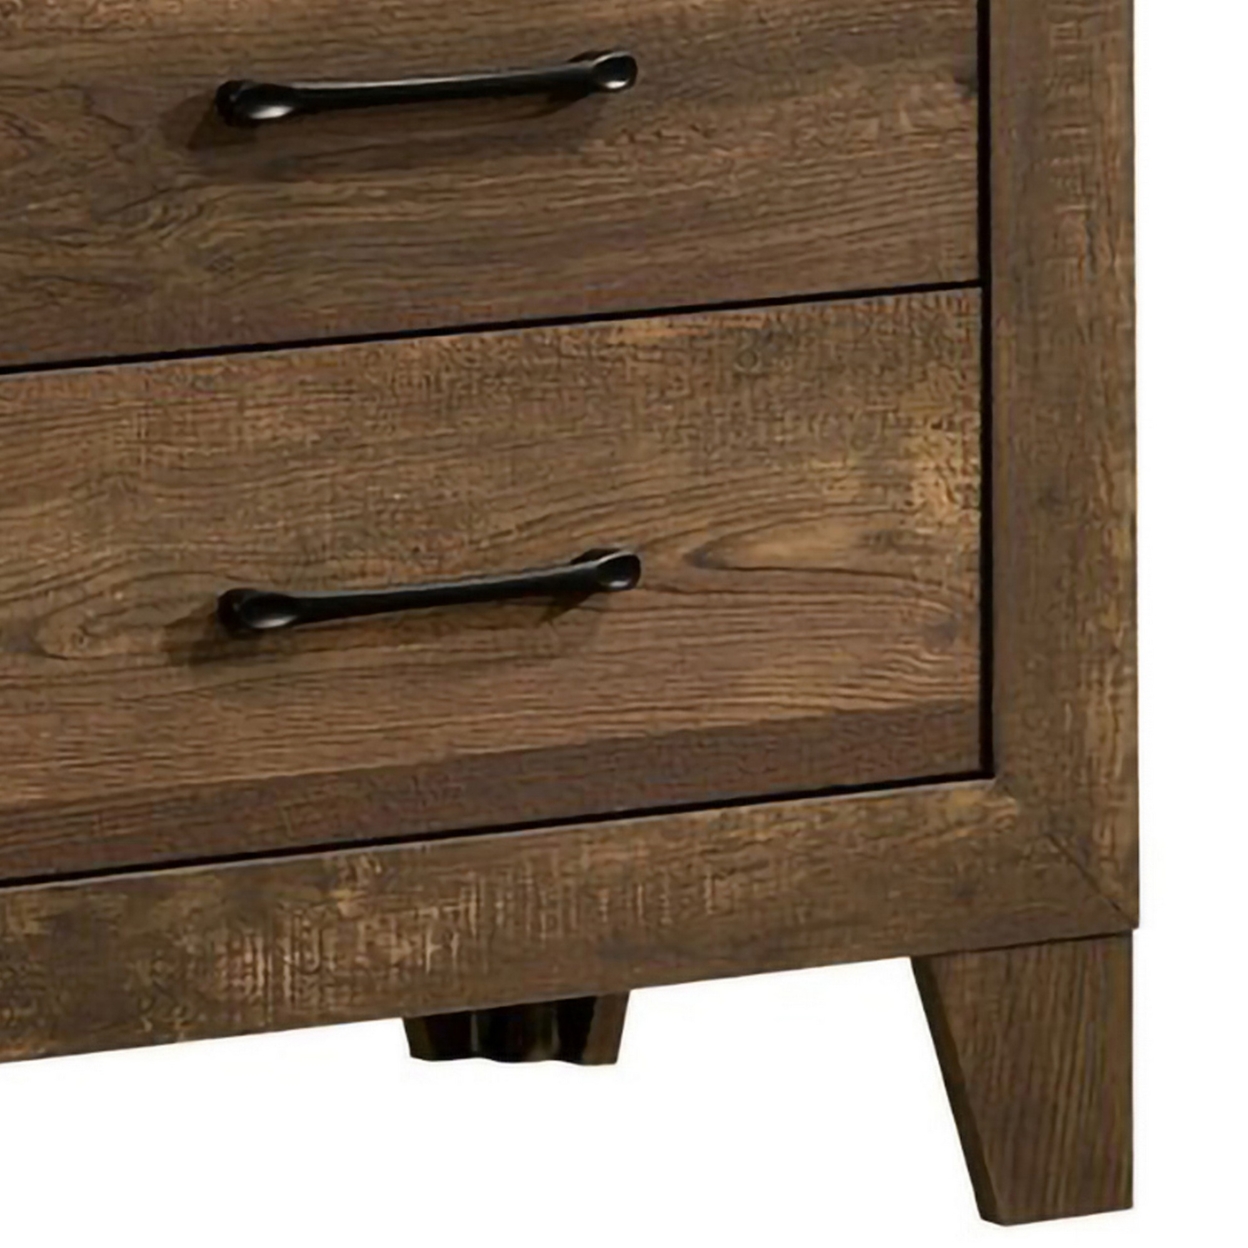 Rustic 2 Drawer Wooden Nightstand With Grain Details, Brown- Saltoro Sherpi